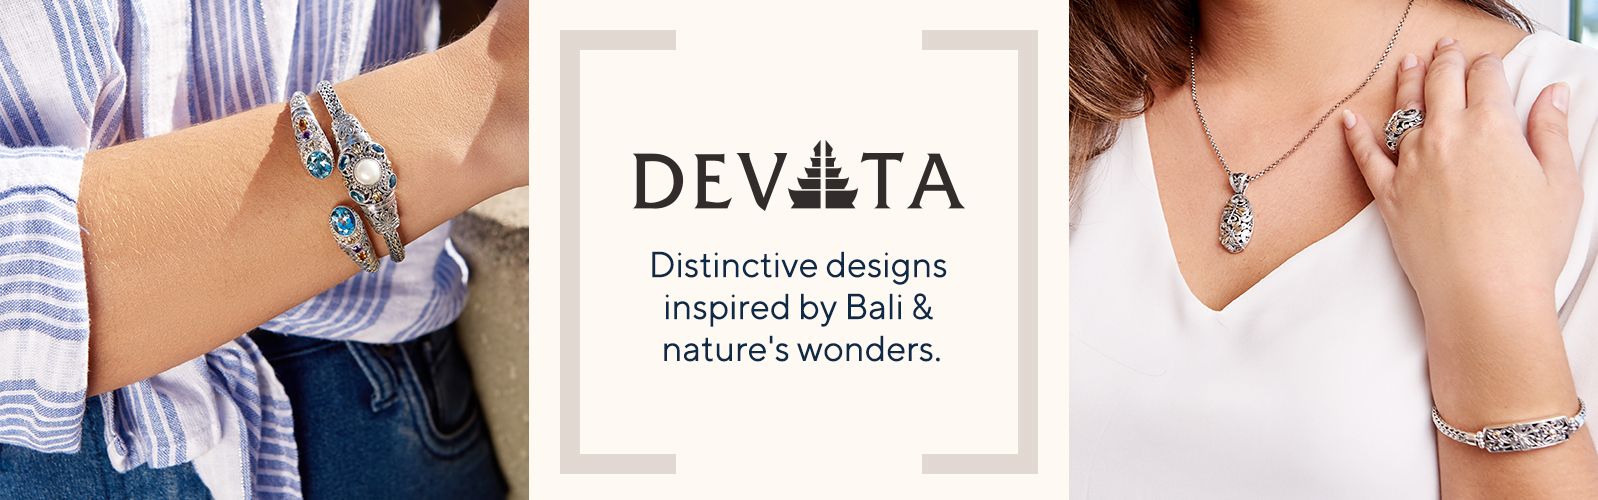 DEVATA  Distinctive designs inspired by Bali & nature's wonders.